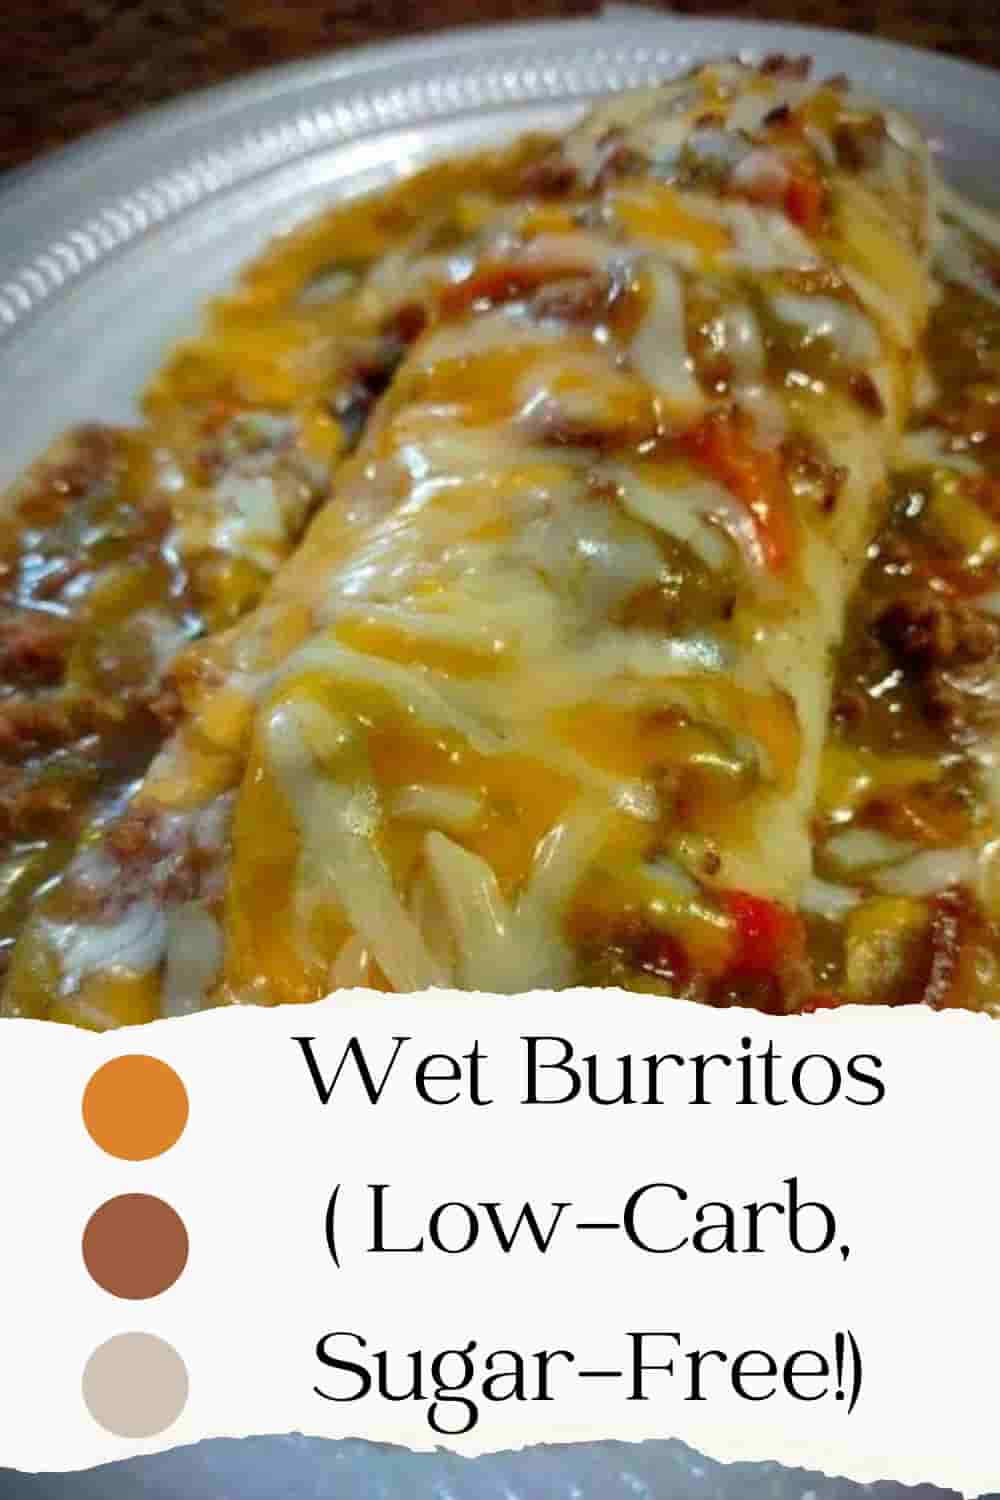 Wet Burritos Low-Carb, Sugar-Free